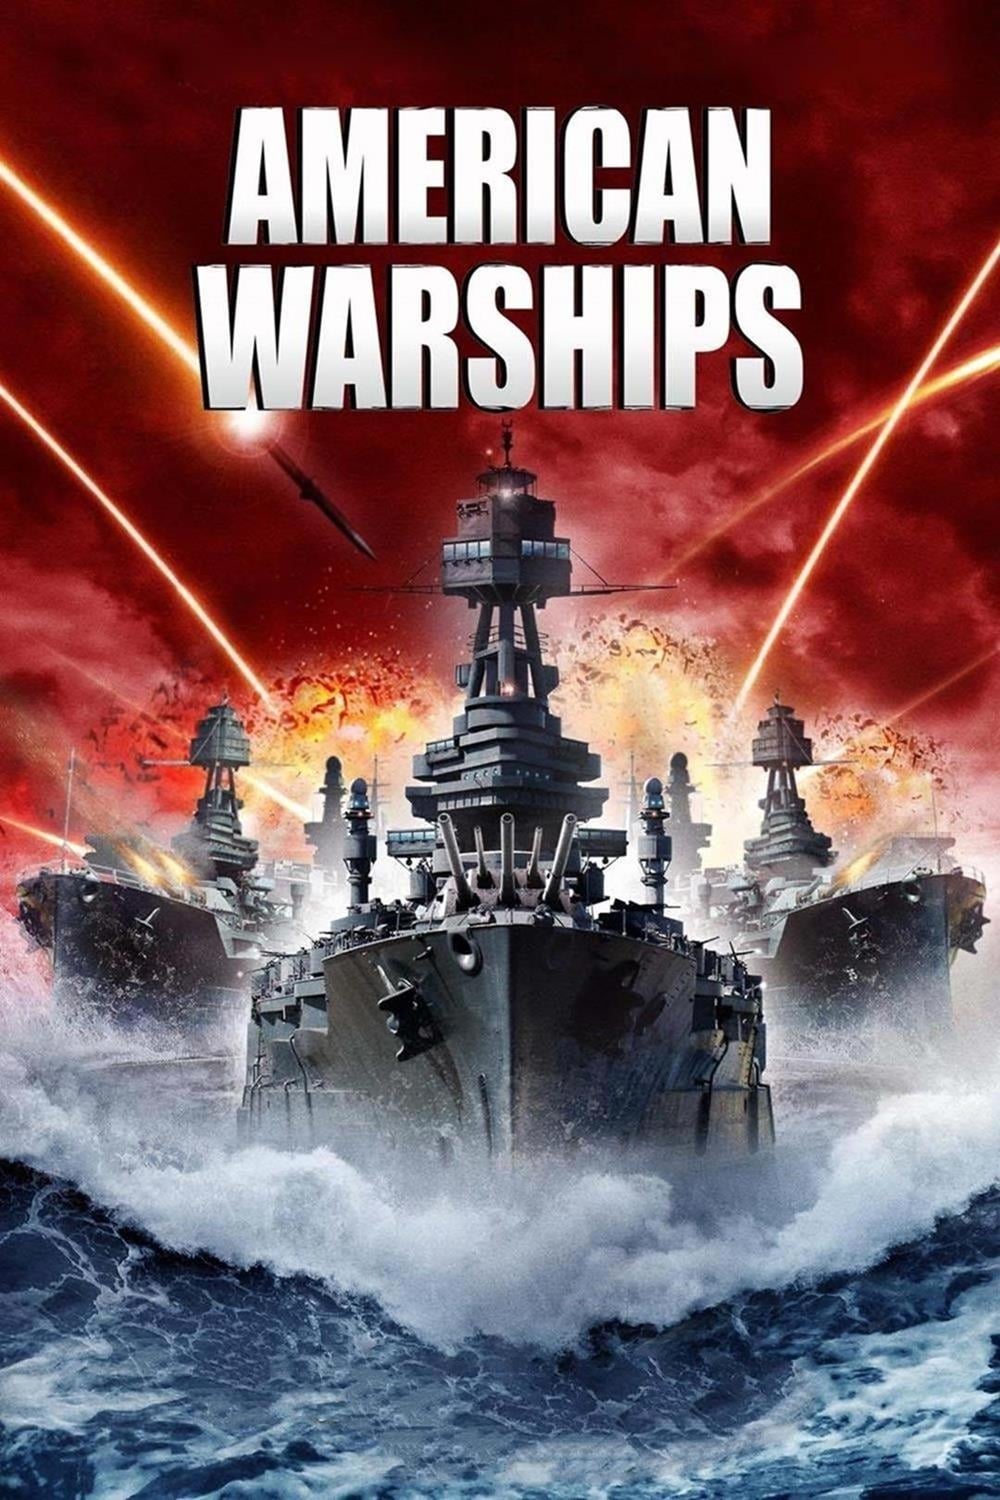 American Warship